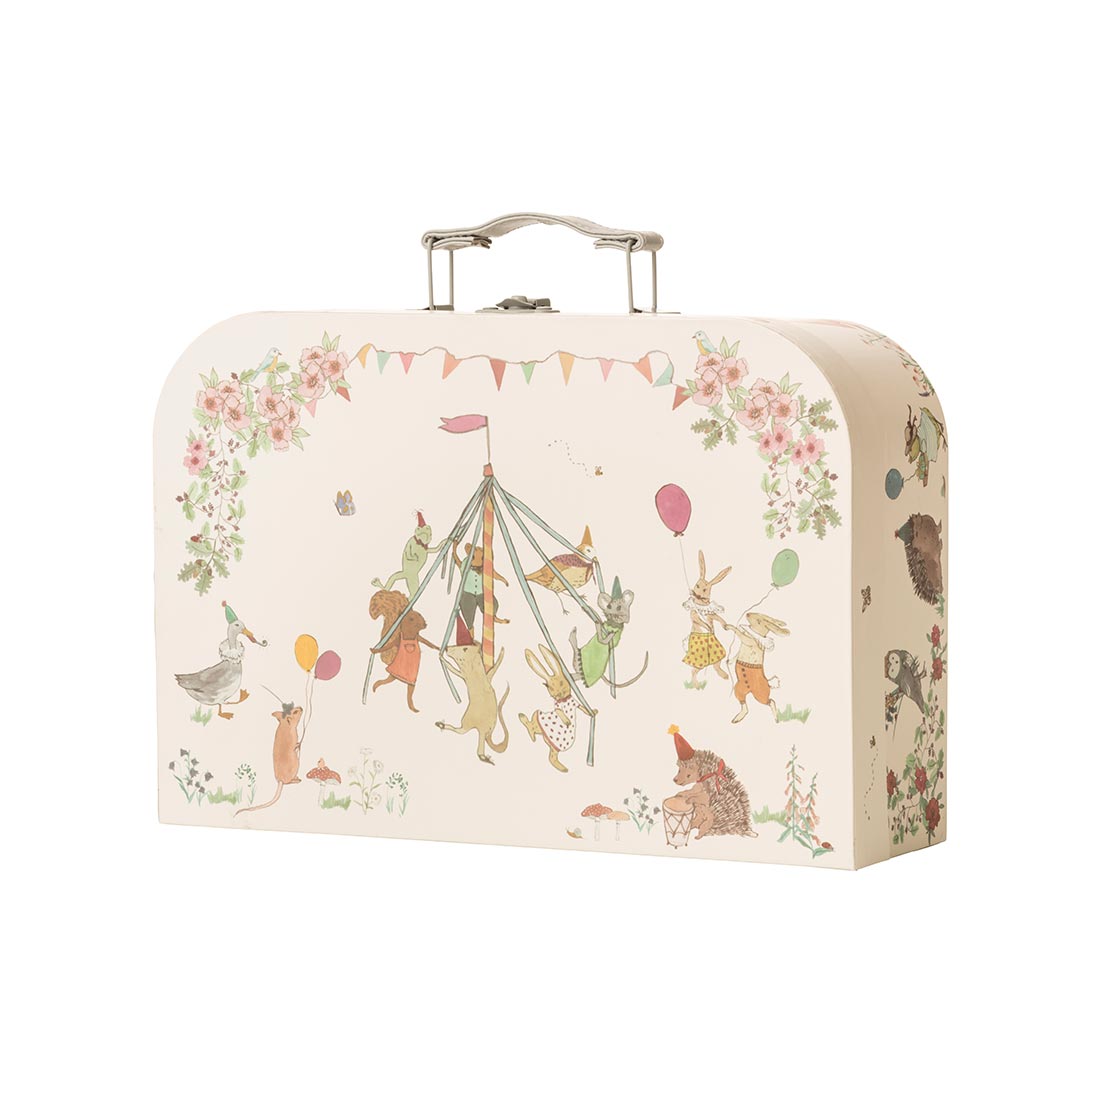 An image of Little Aurelia, Woodland Friends Gift Suitcase